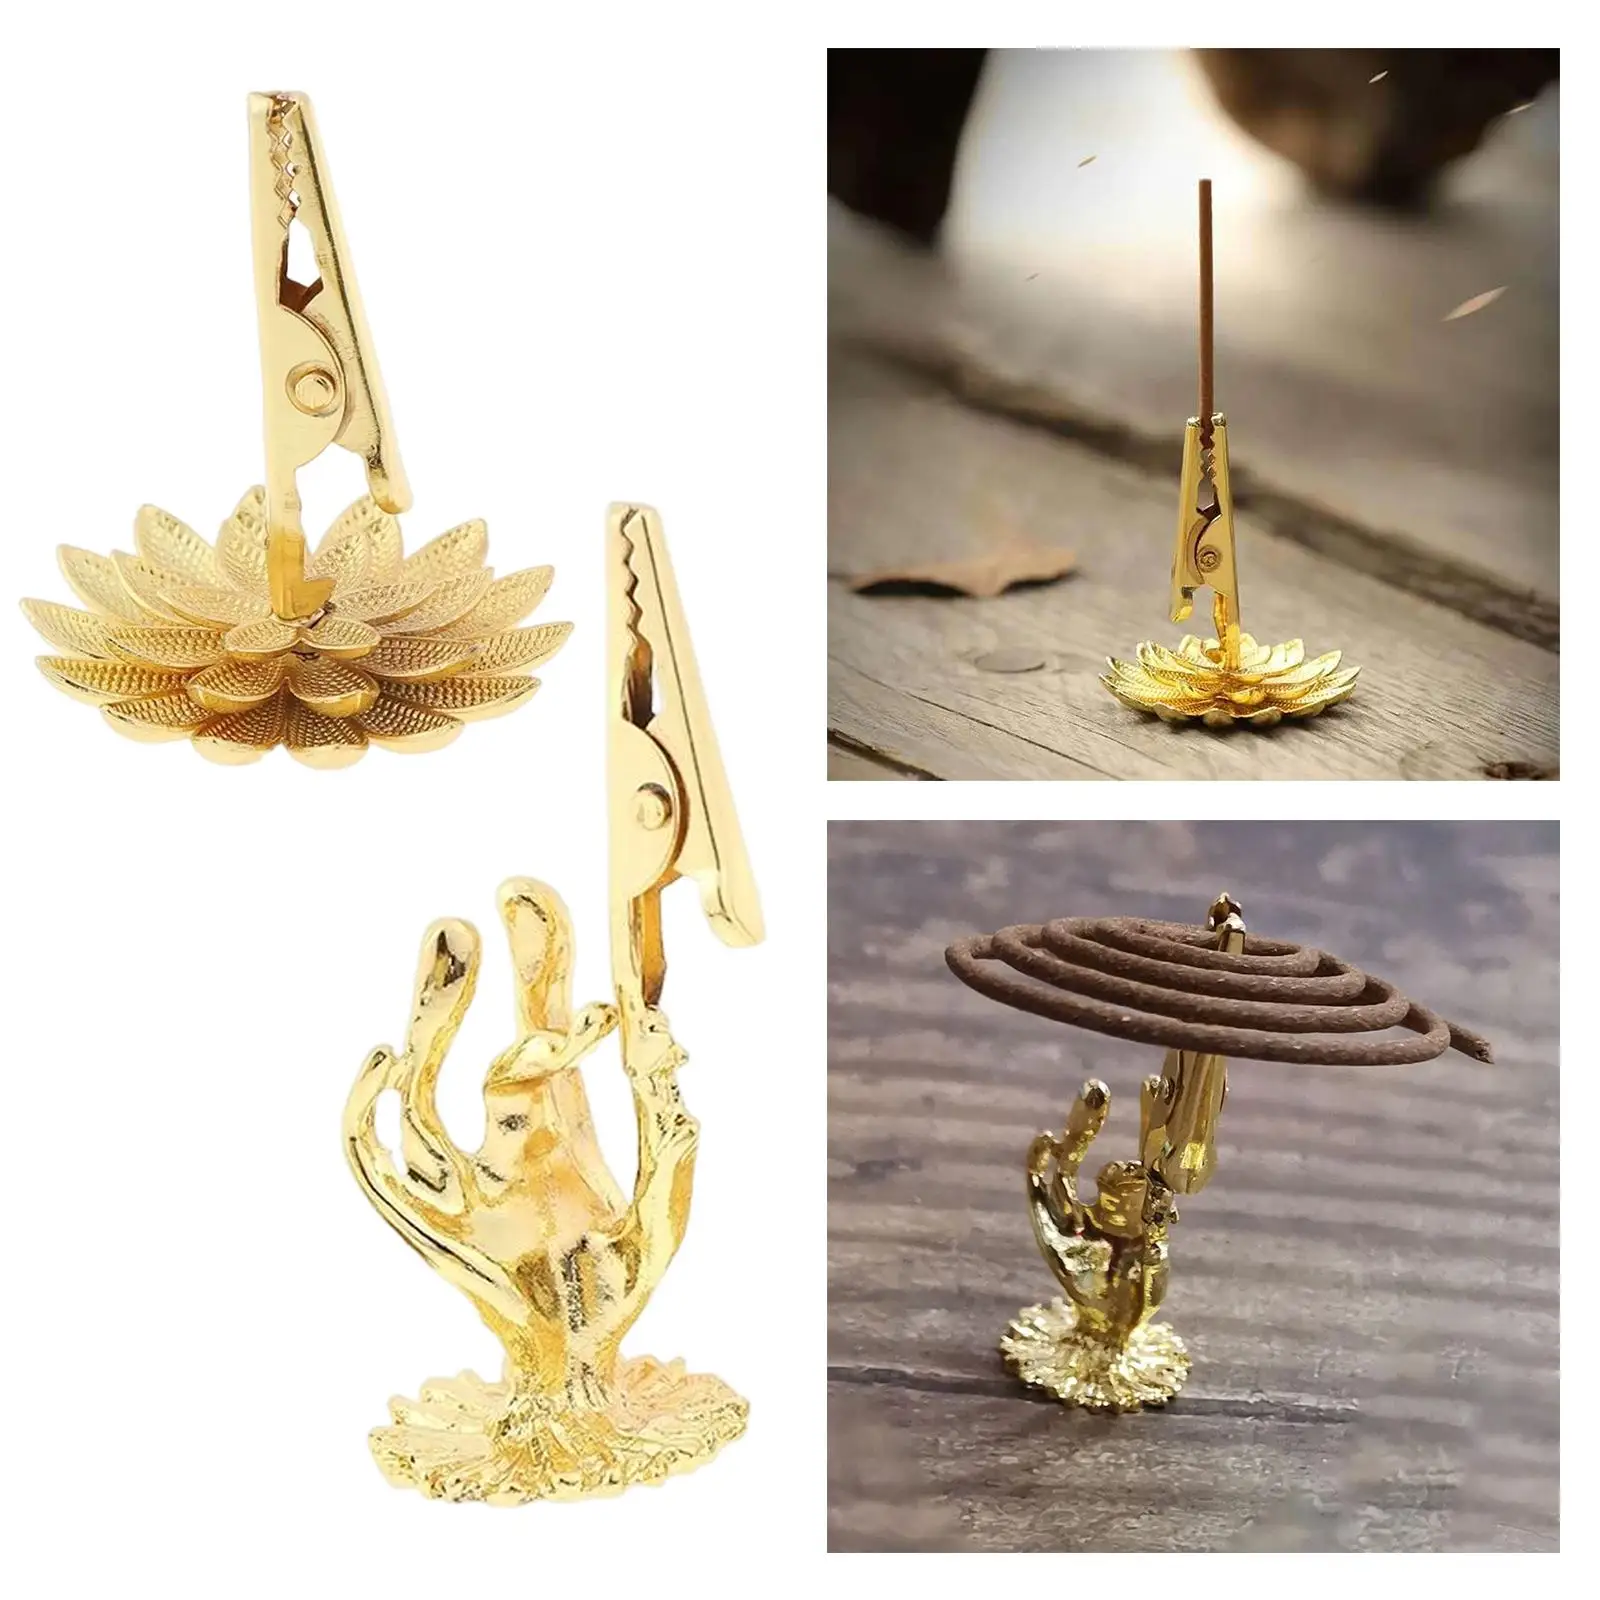 Incenses Clip Alloy Golden Plated Decorative Incenses Burner for Home Ornament